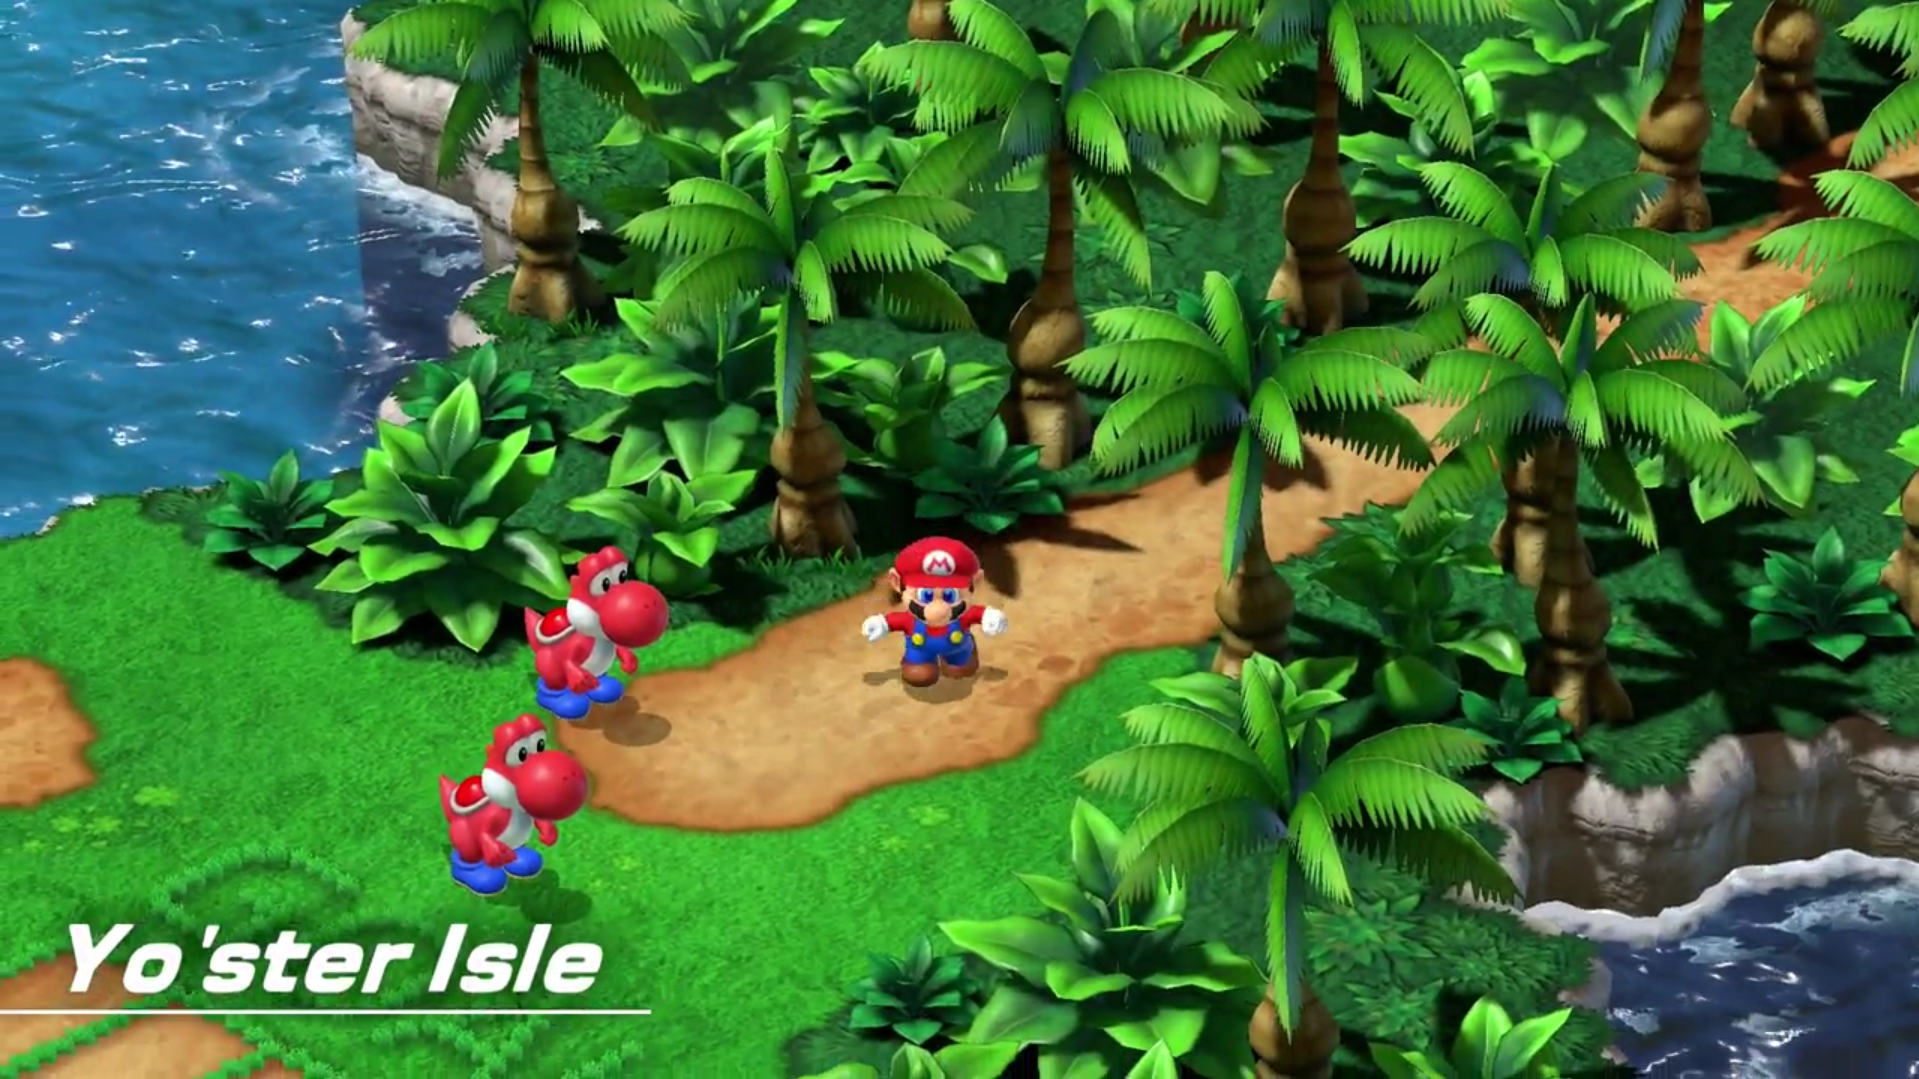 Mario first entering Yo'ster Isle in Super Mario RPG.